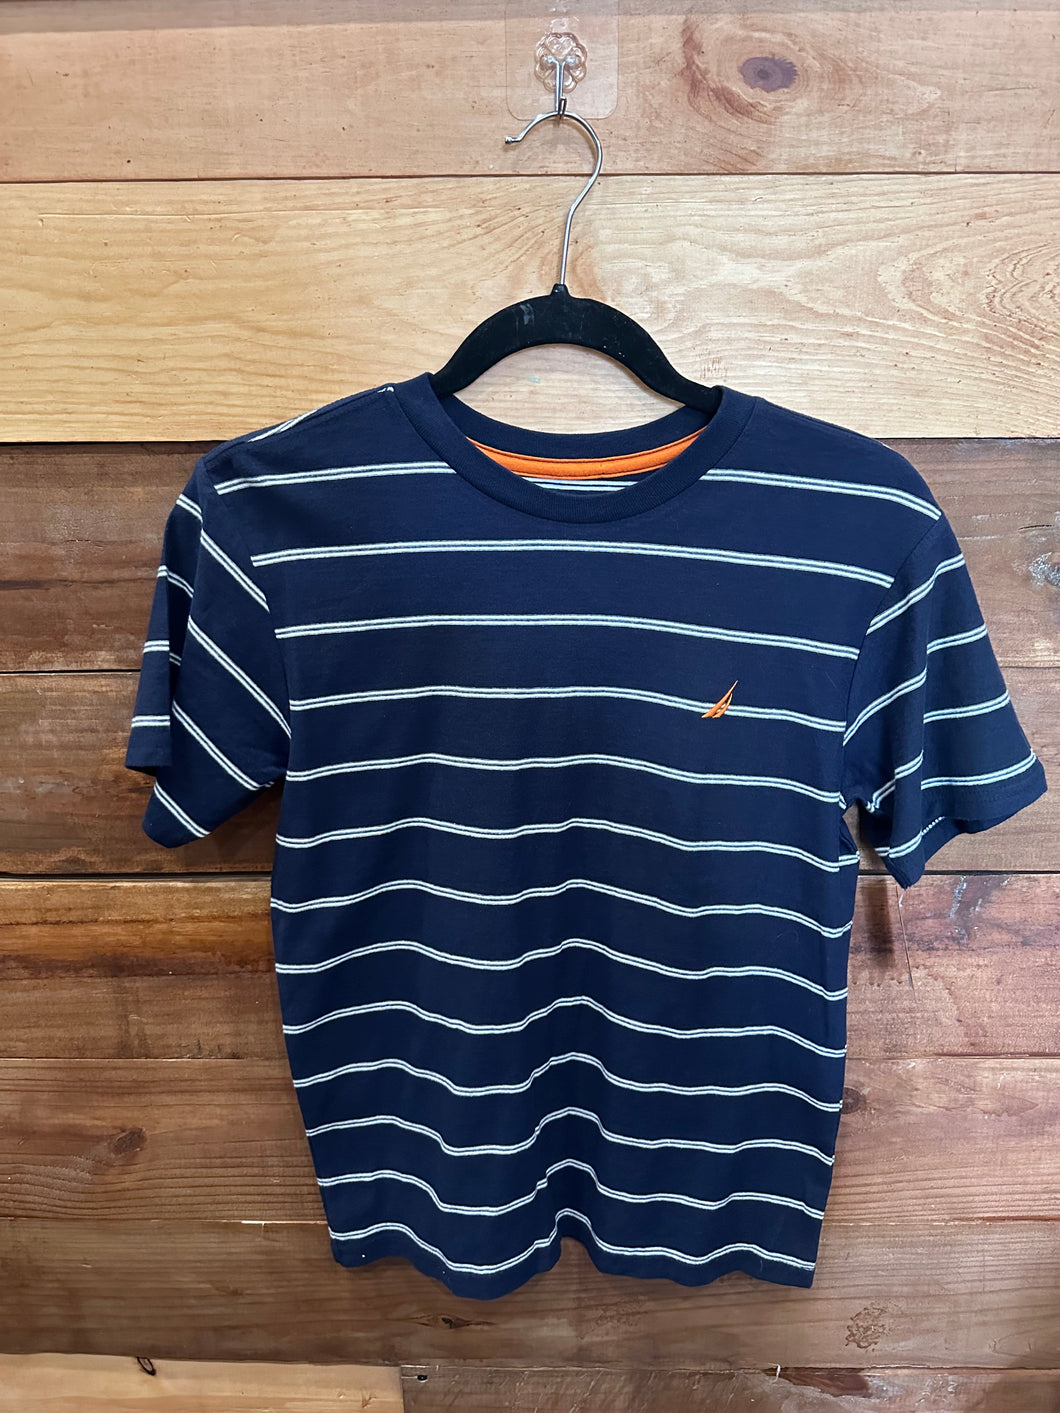 Nautica Blue Striped Shirt Size 10-12